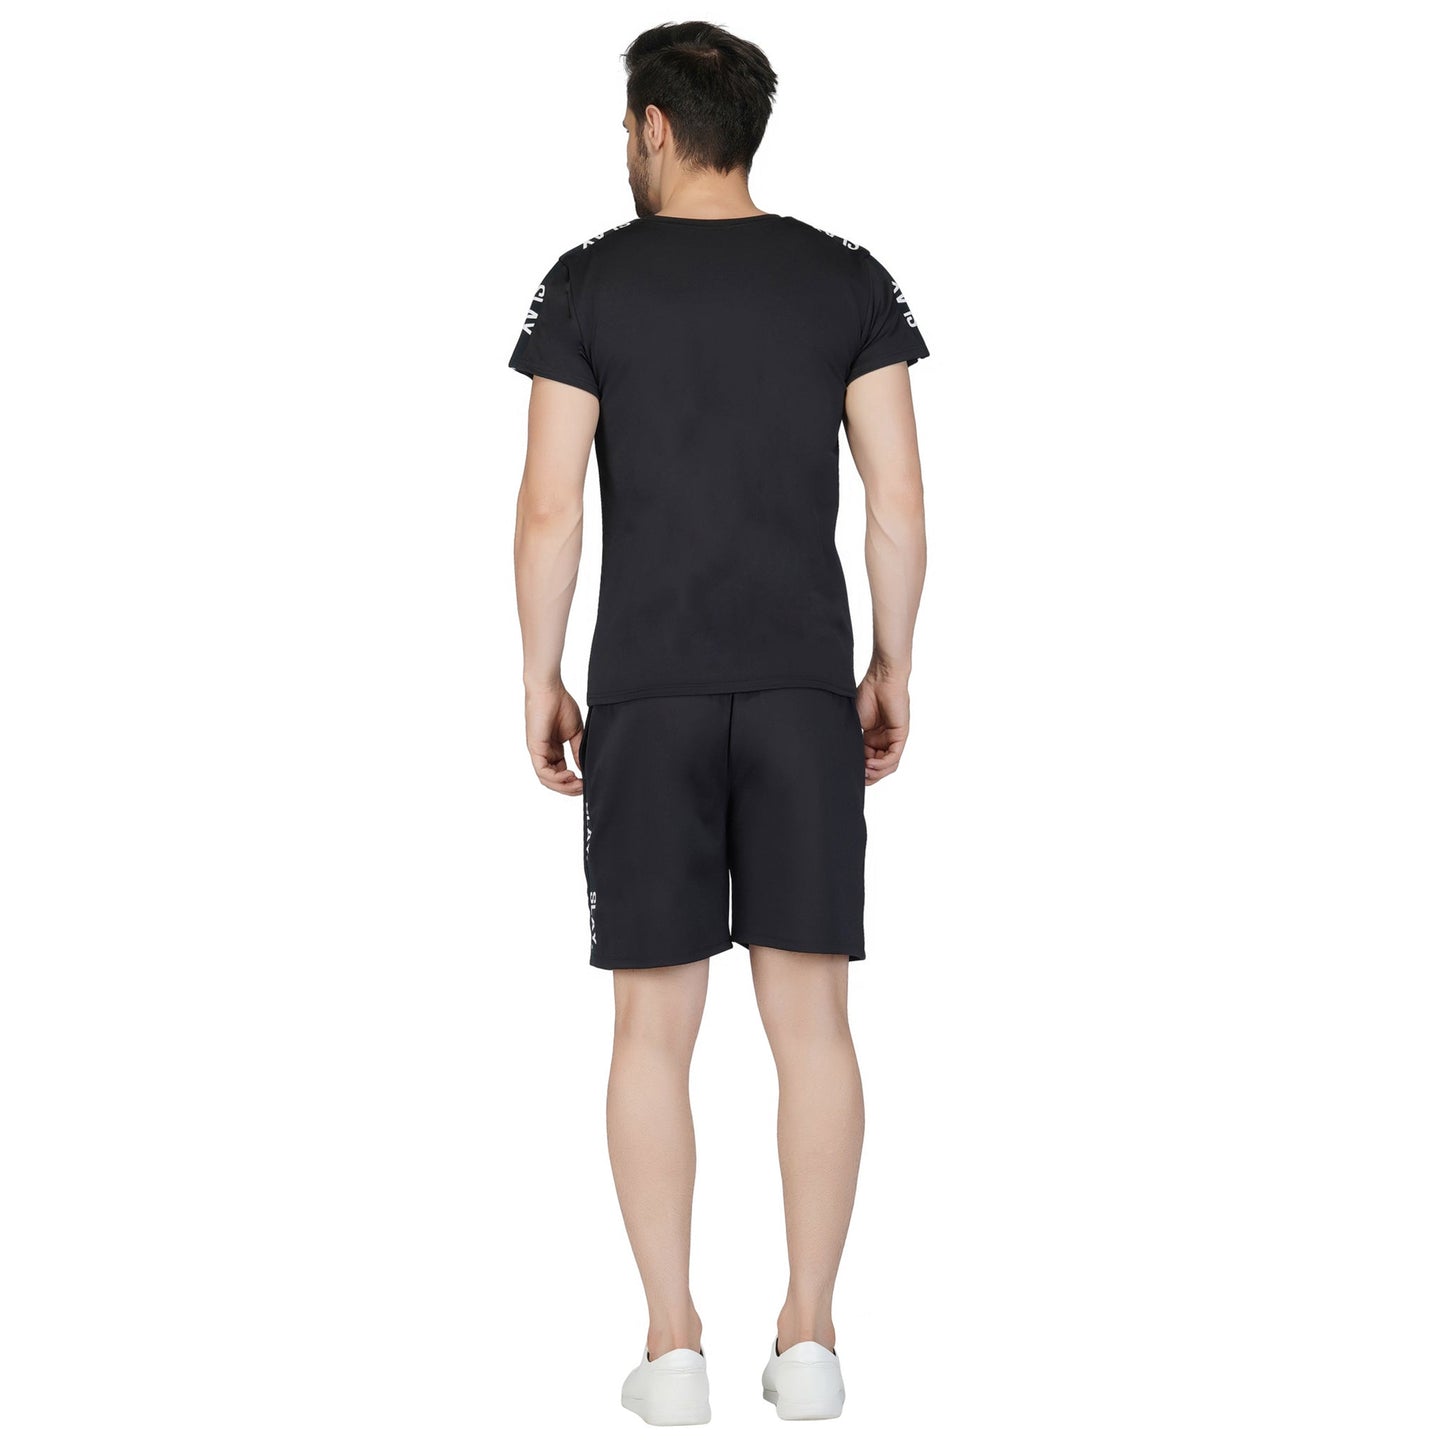 SLAY. Men's Activewear Black Sports Shorts (4 way Stretch Fabric)